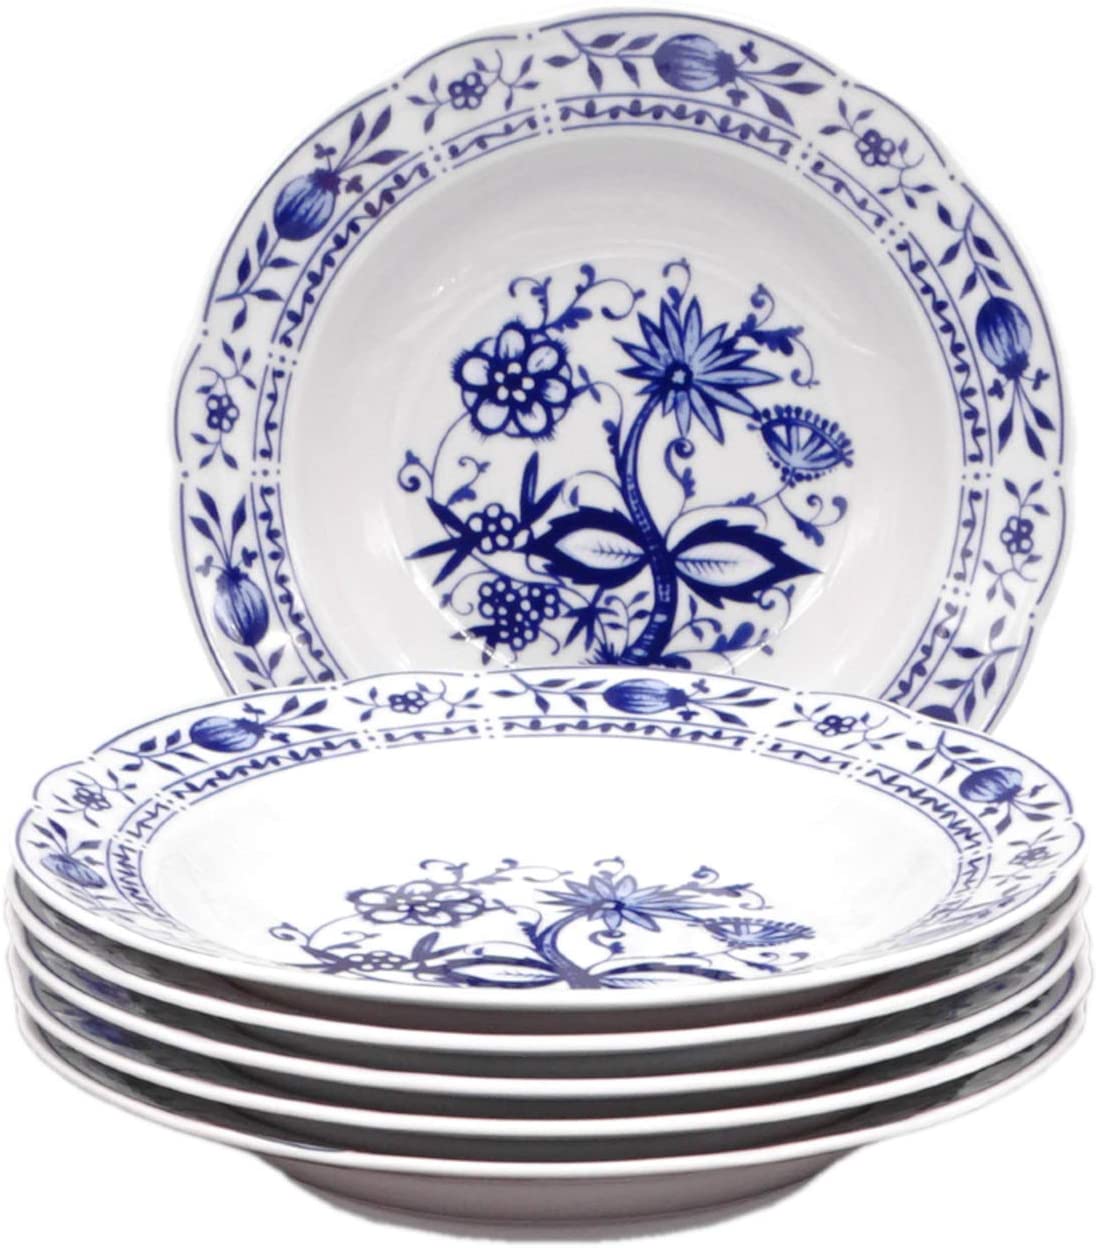 Kahla 17A102A72067U Plate Set Porcelain Onion Pattern Blue / White 6-Piece Set Soup plate for 6 persons, flower decoration, deep plate, round pasta plate.